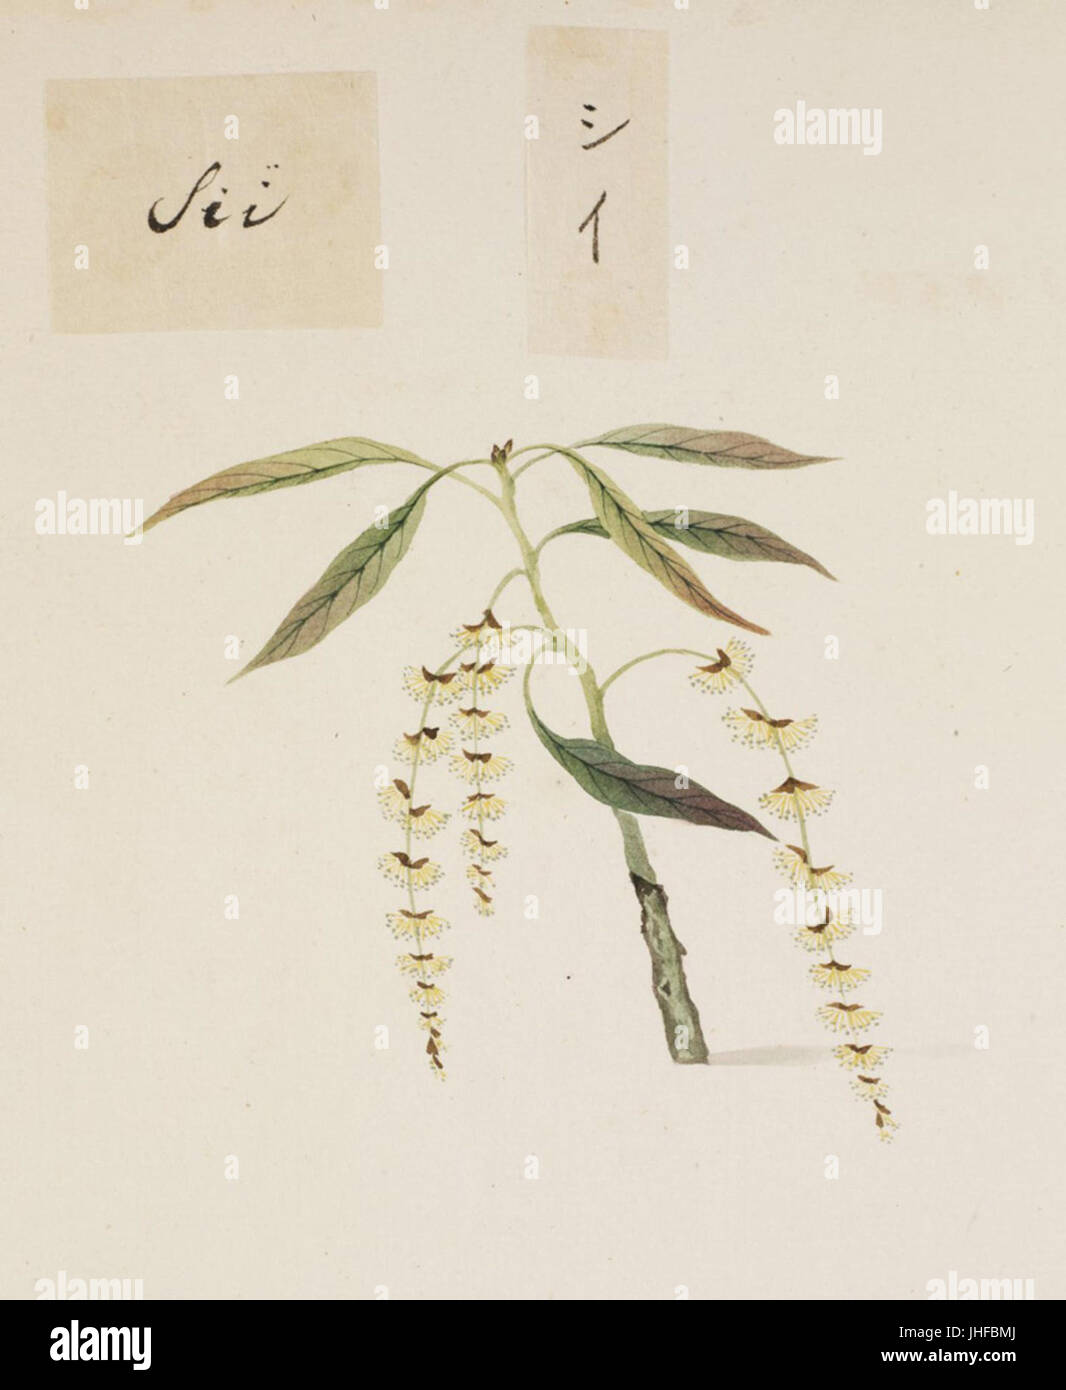 Naturalis Biodiversity Center - RMNH.ART.801 - Castanopsis sieboldii - Kawahara Keiga - 1823 - 1829 - Siebold Collection - pencil drawing - water colour Stock Photo